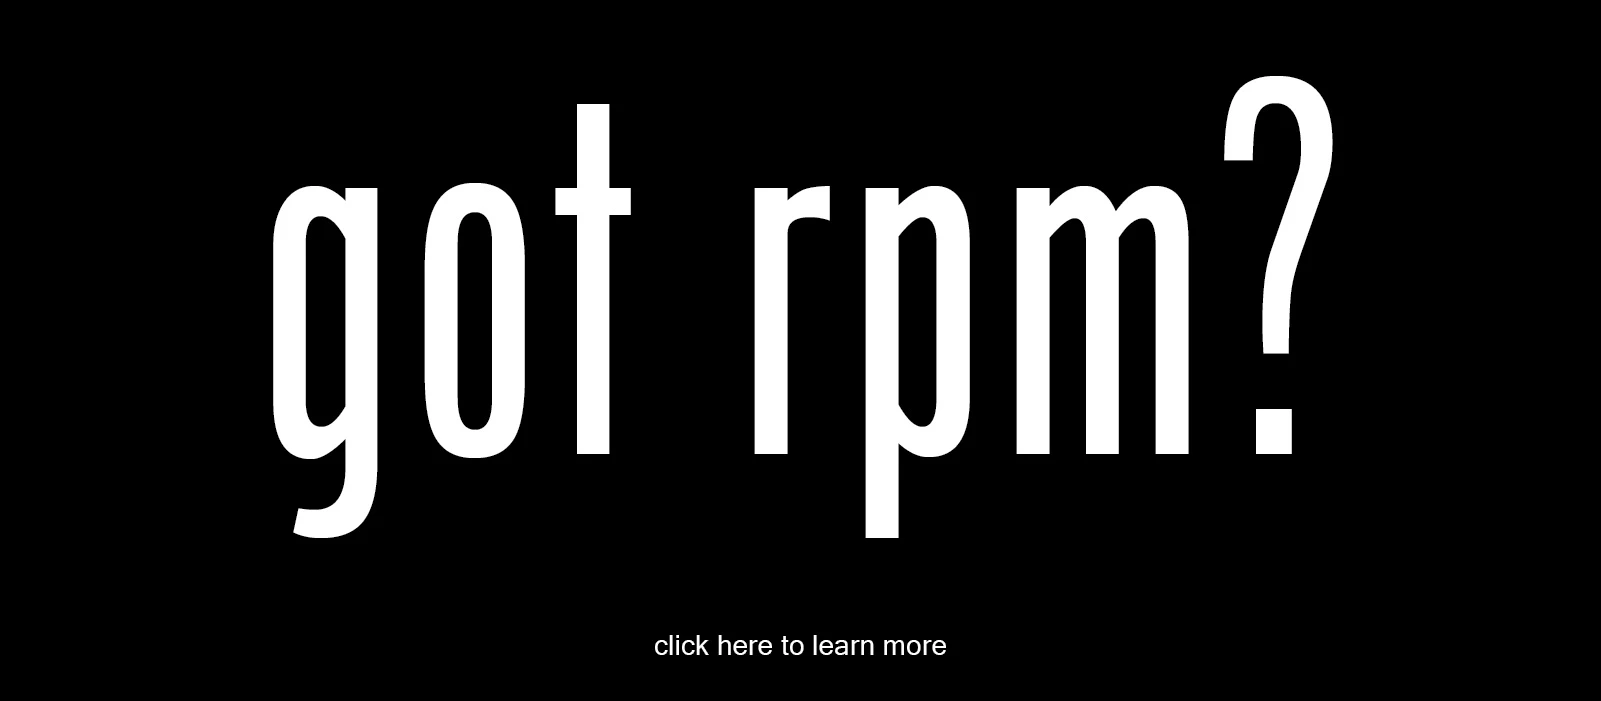 got rpm?